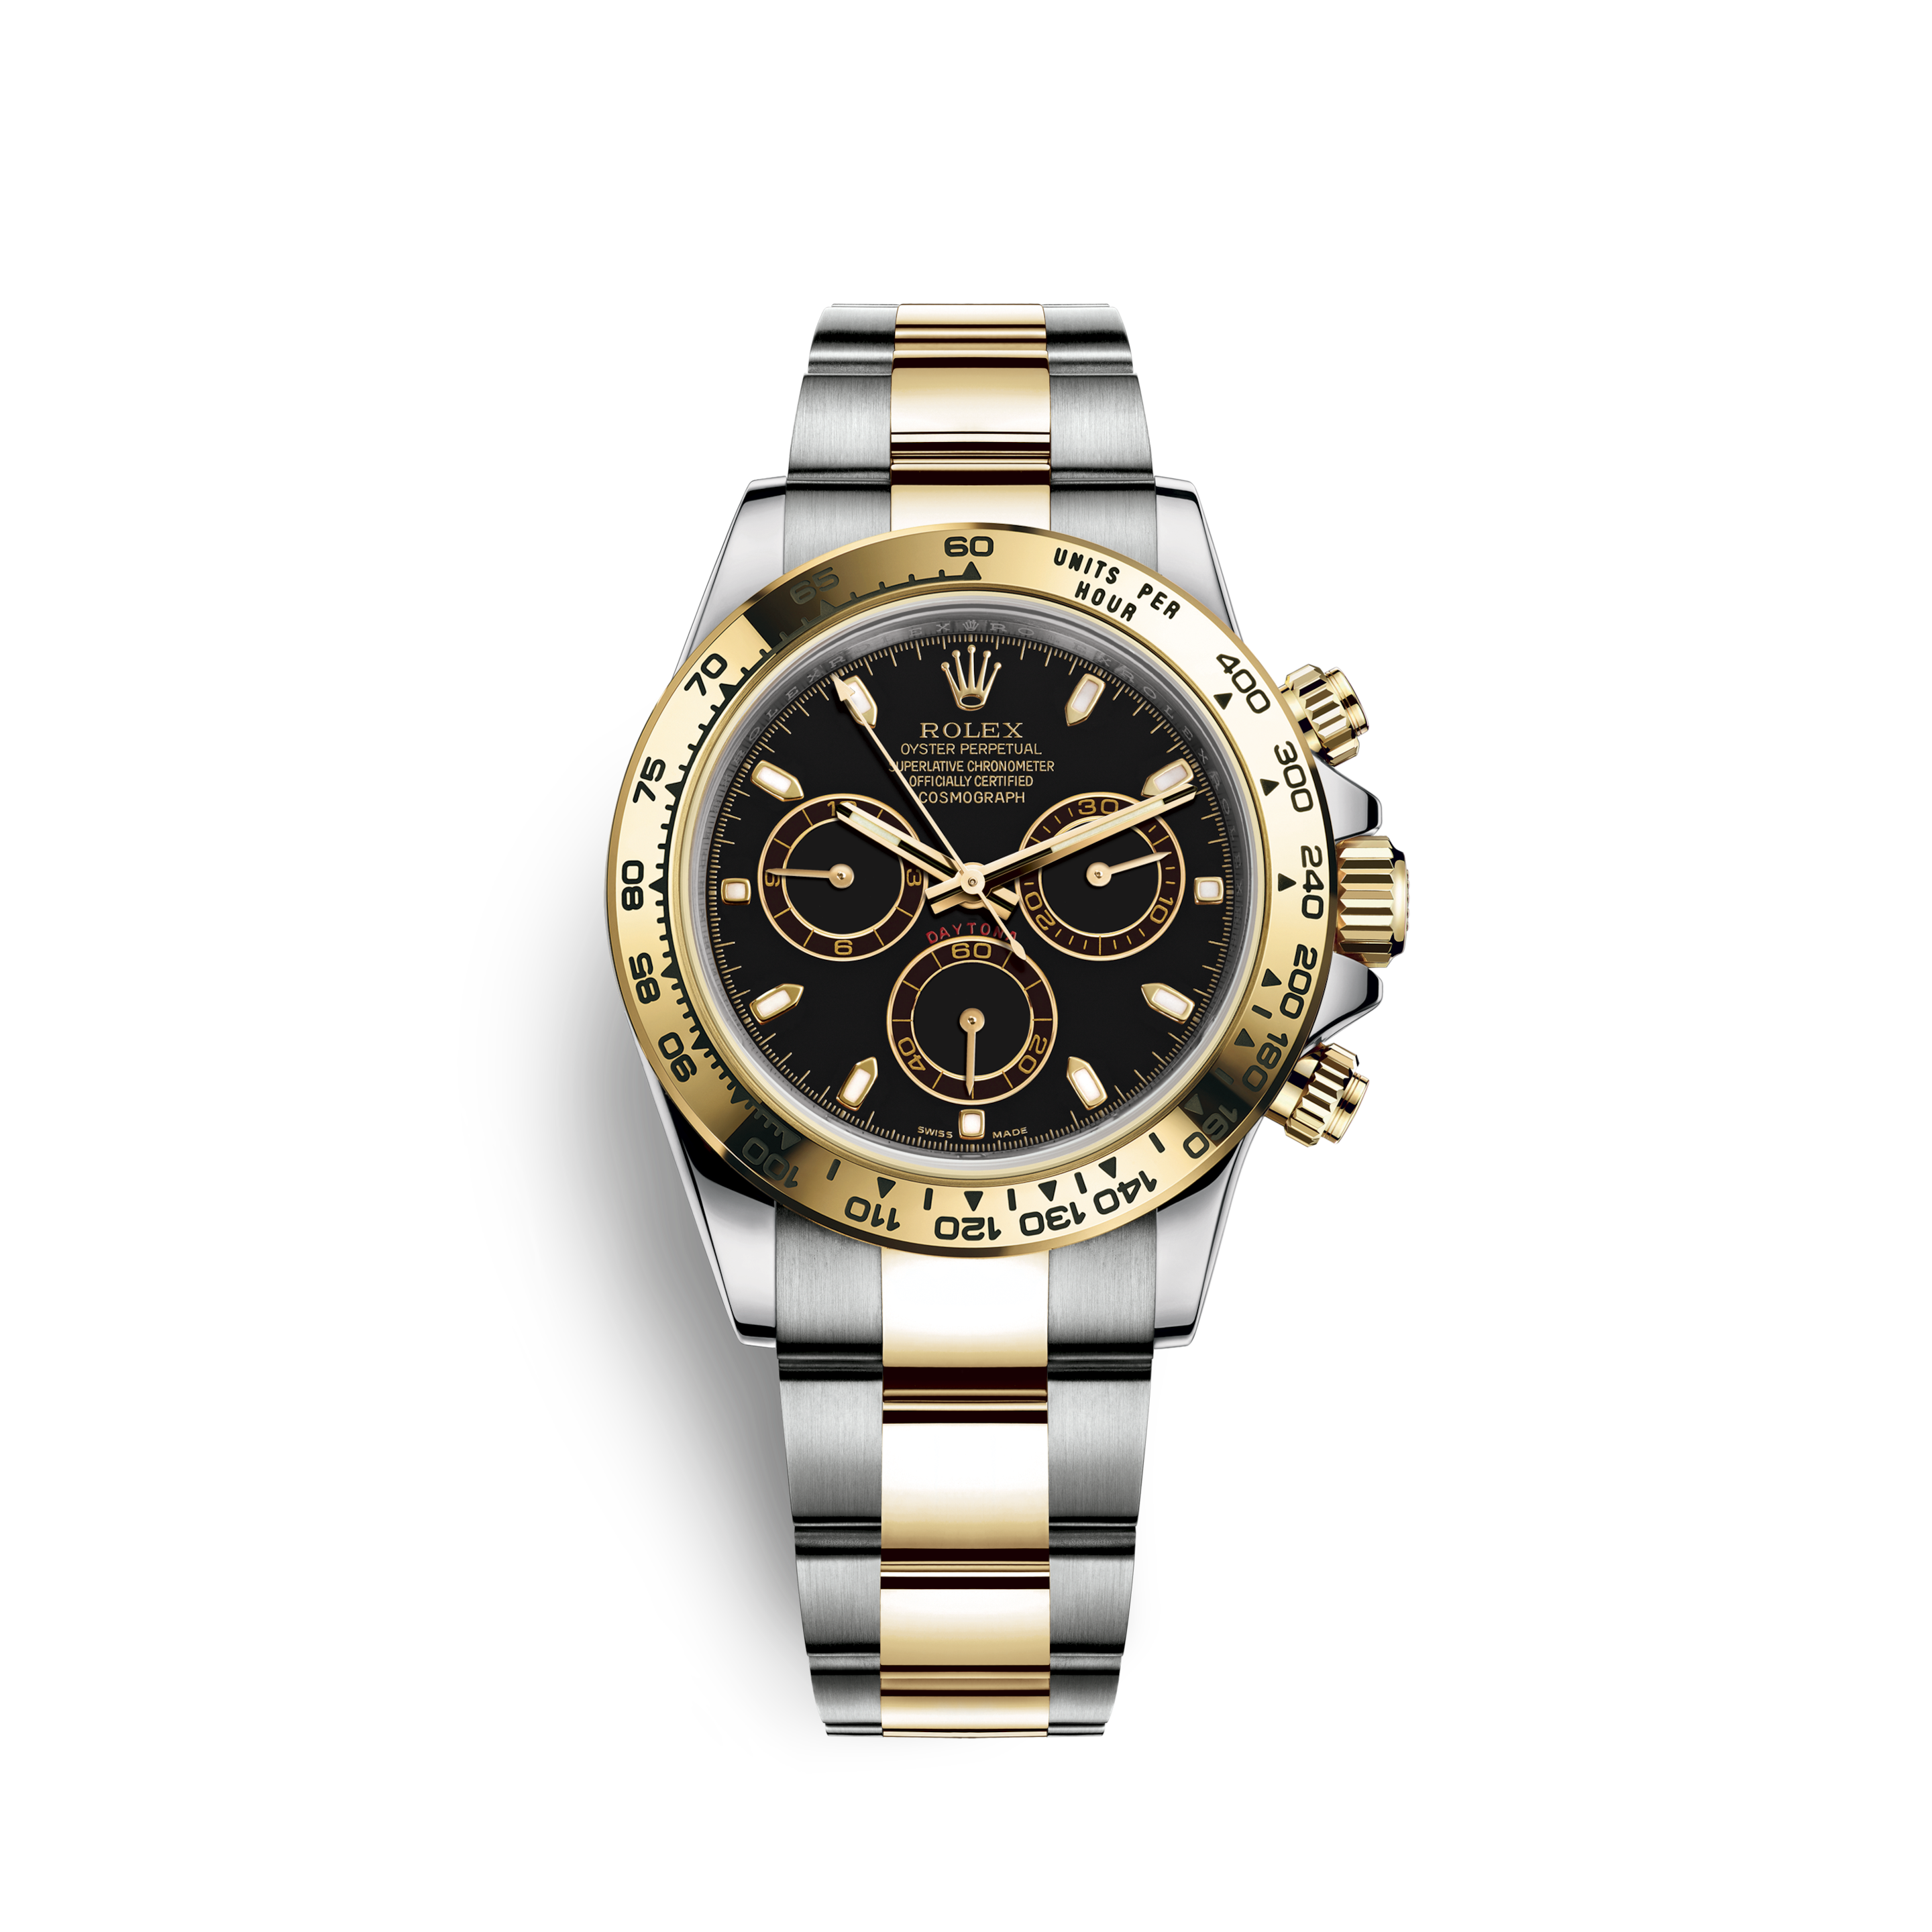 Rolex Cosmograph Daytona - A Watch Born 